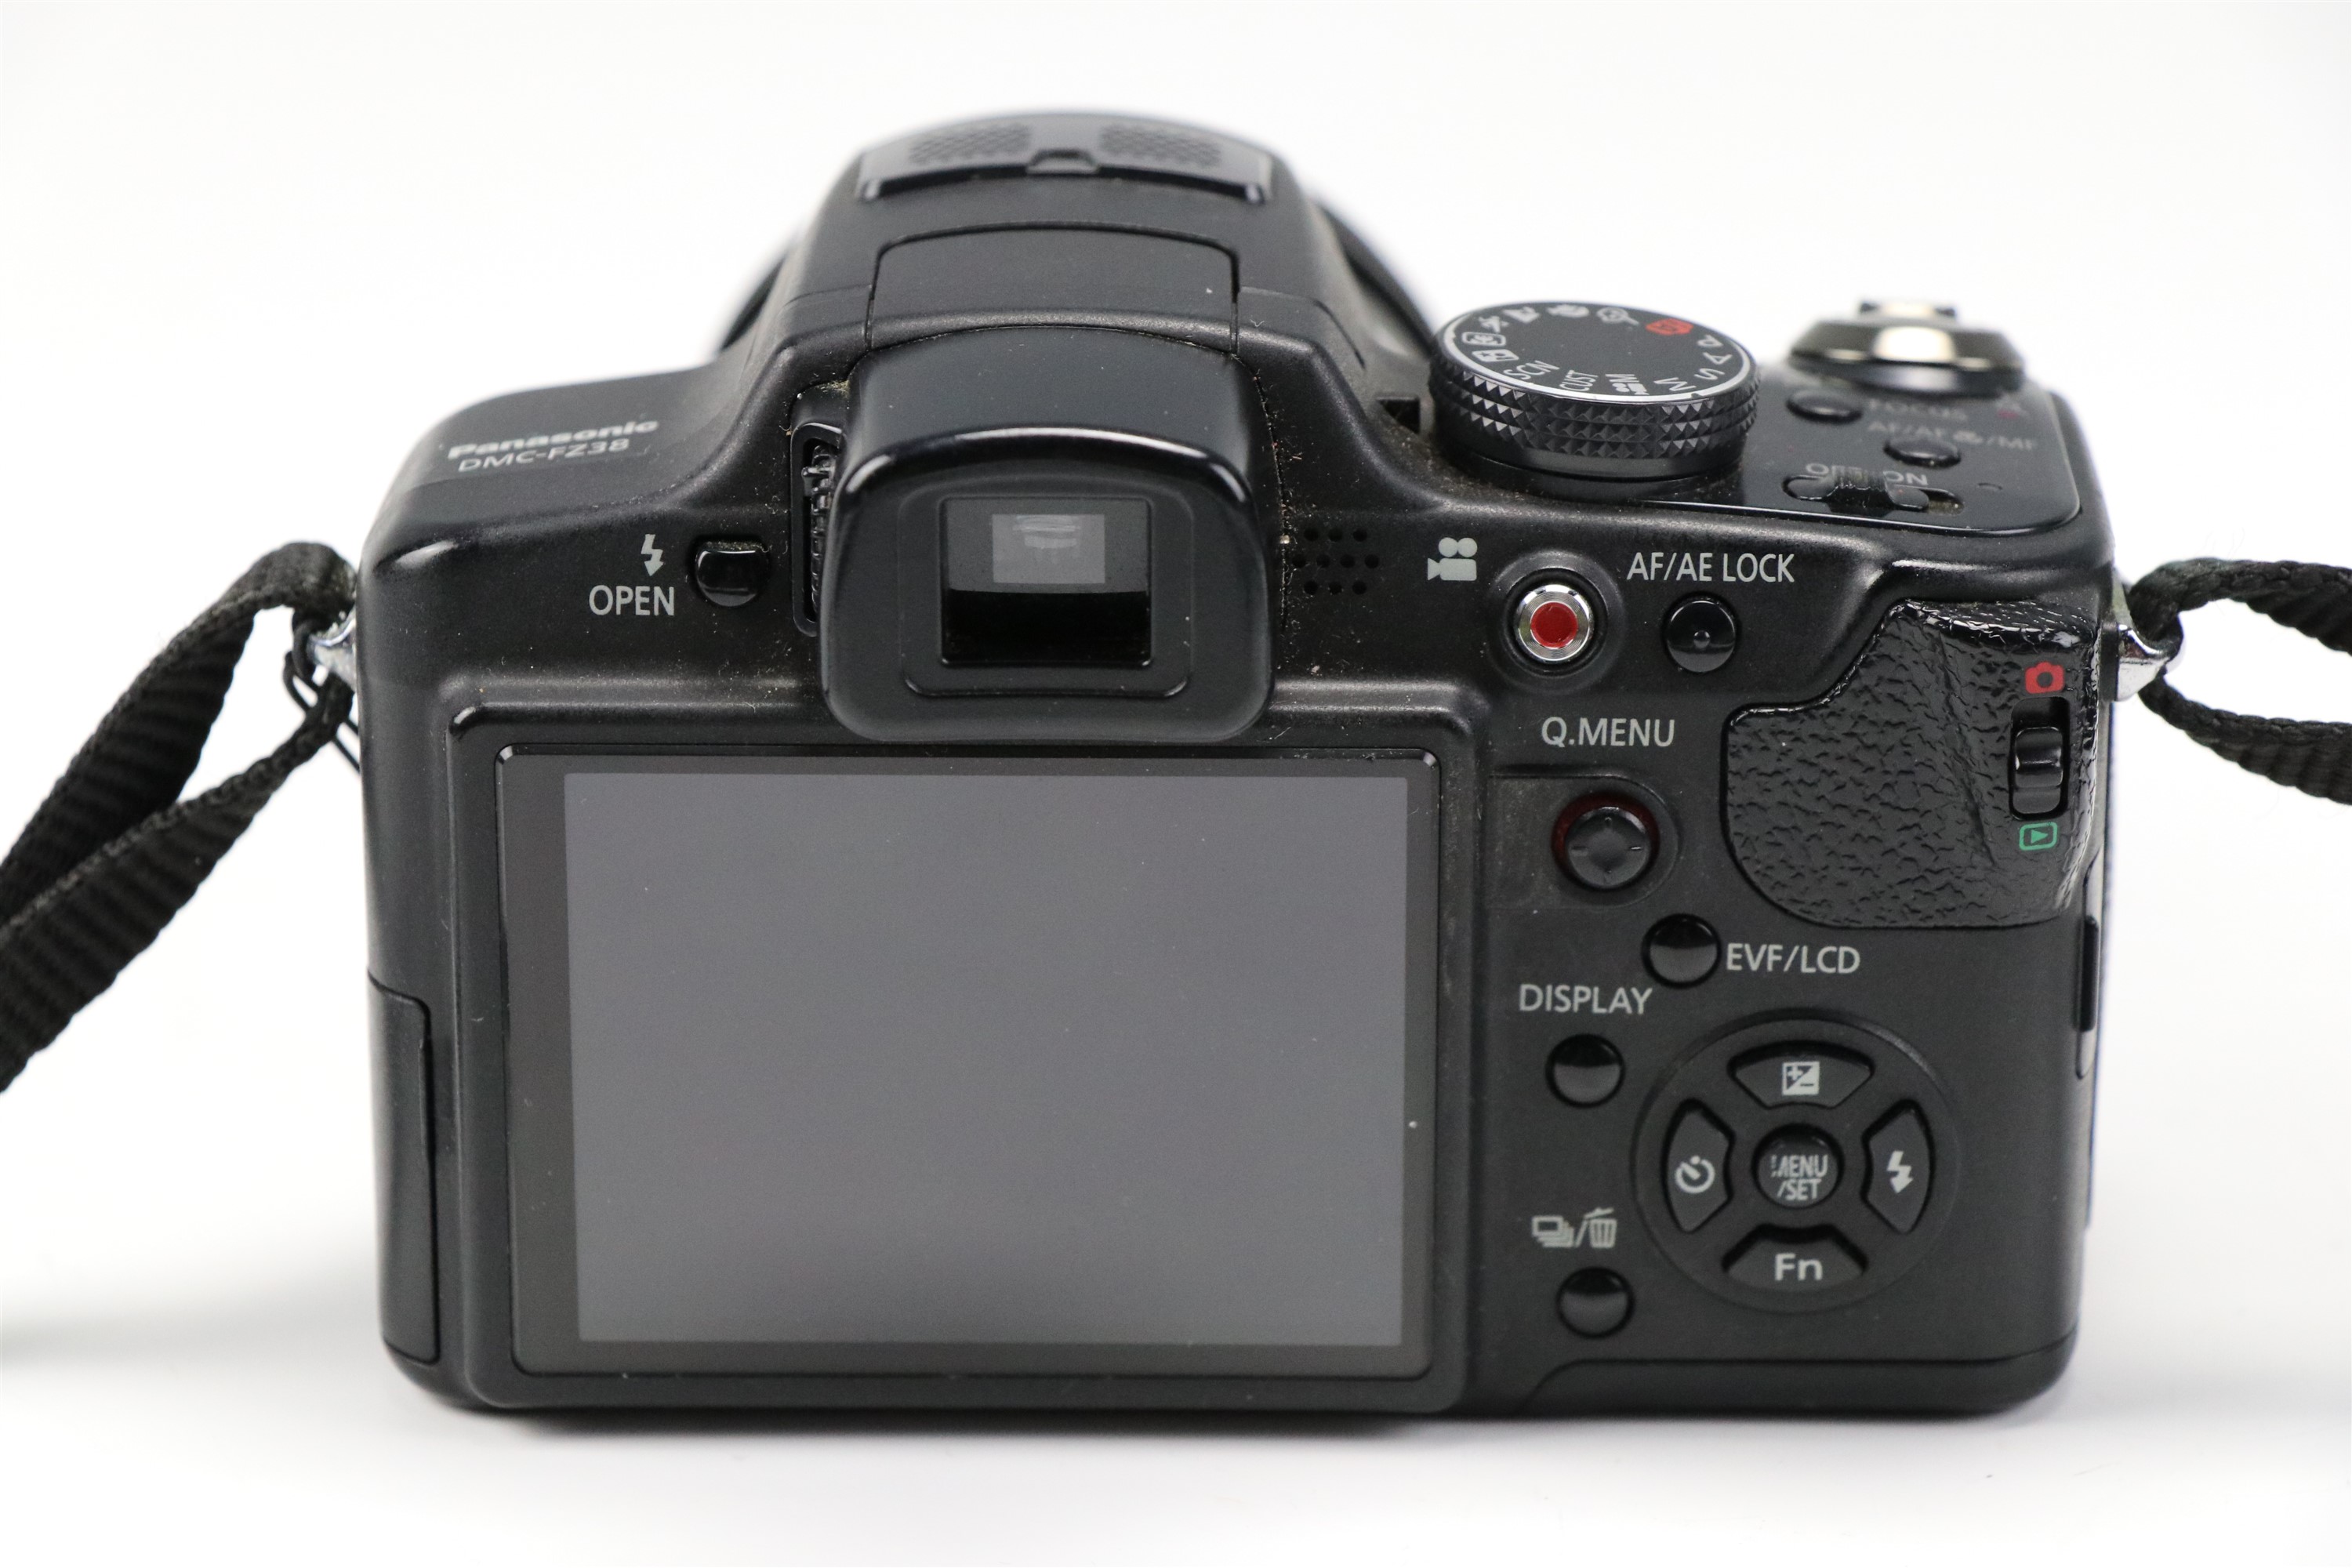 Lumix F238 HD, Canon EOS IX, Canon Digital IXUS 430, Konica Minolta Dimage 25 and Konica C35 EFP - Image 14 of 24